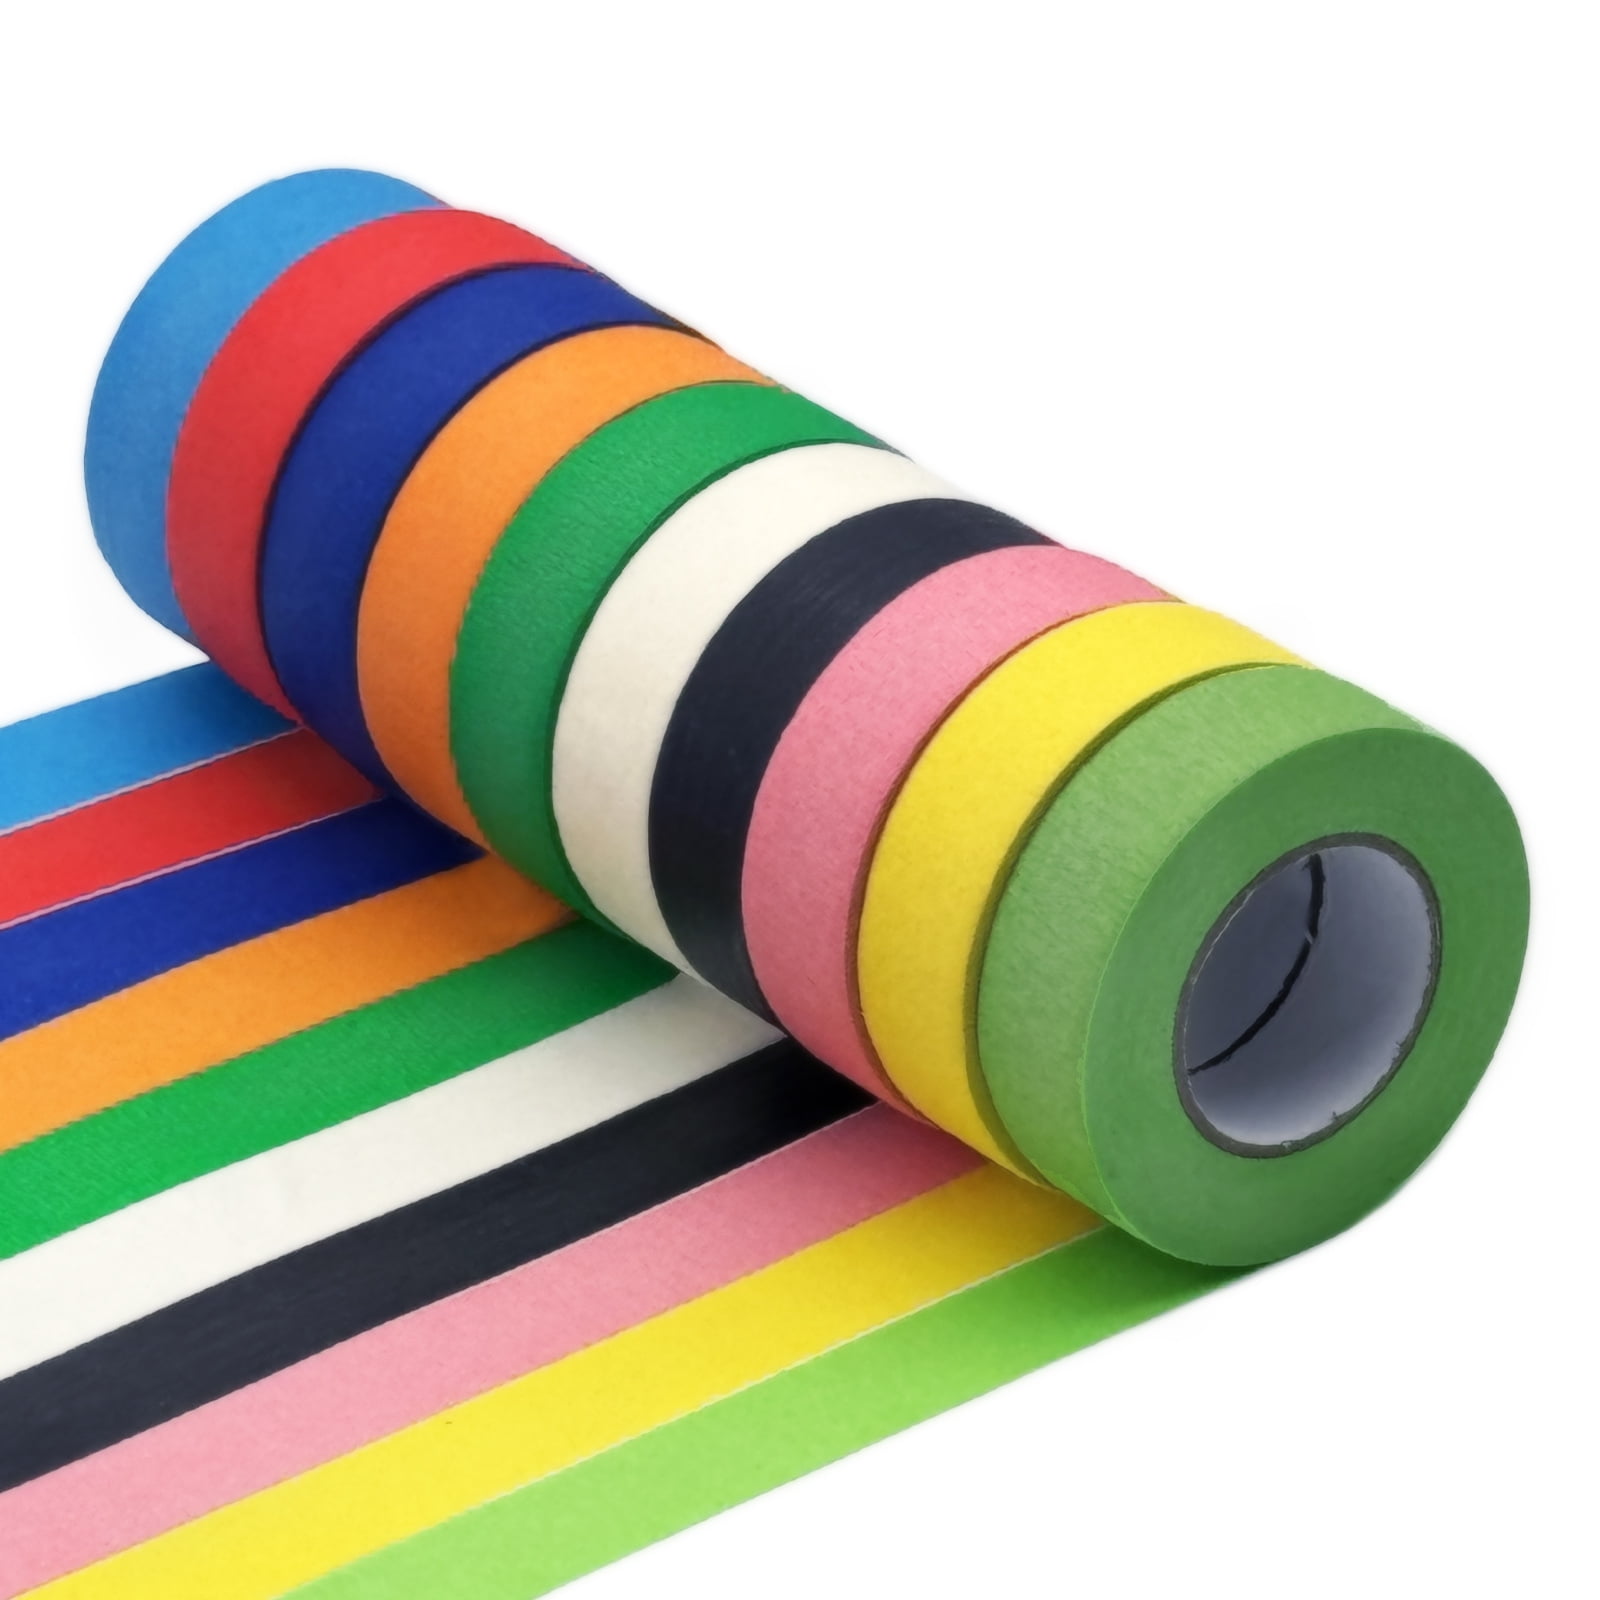 OWLKELA Colored Masking Tape 16 Yard Per Roll, 6 Rolls Rainbow